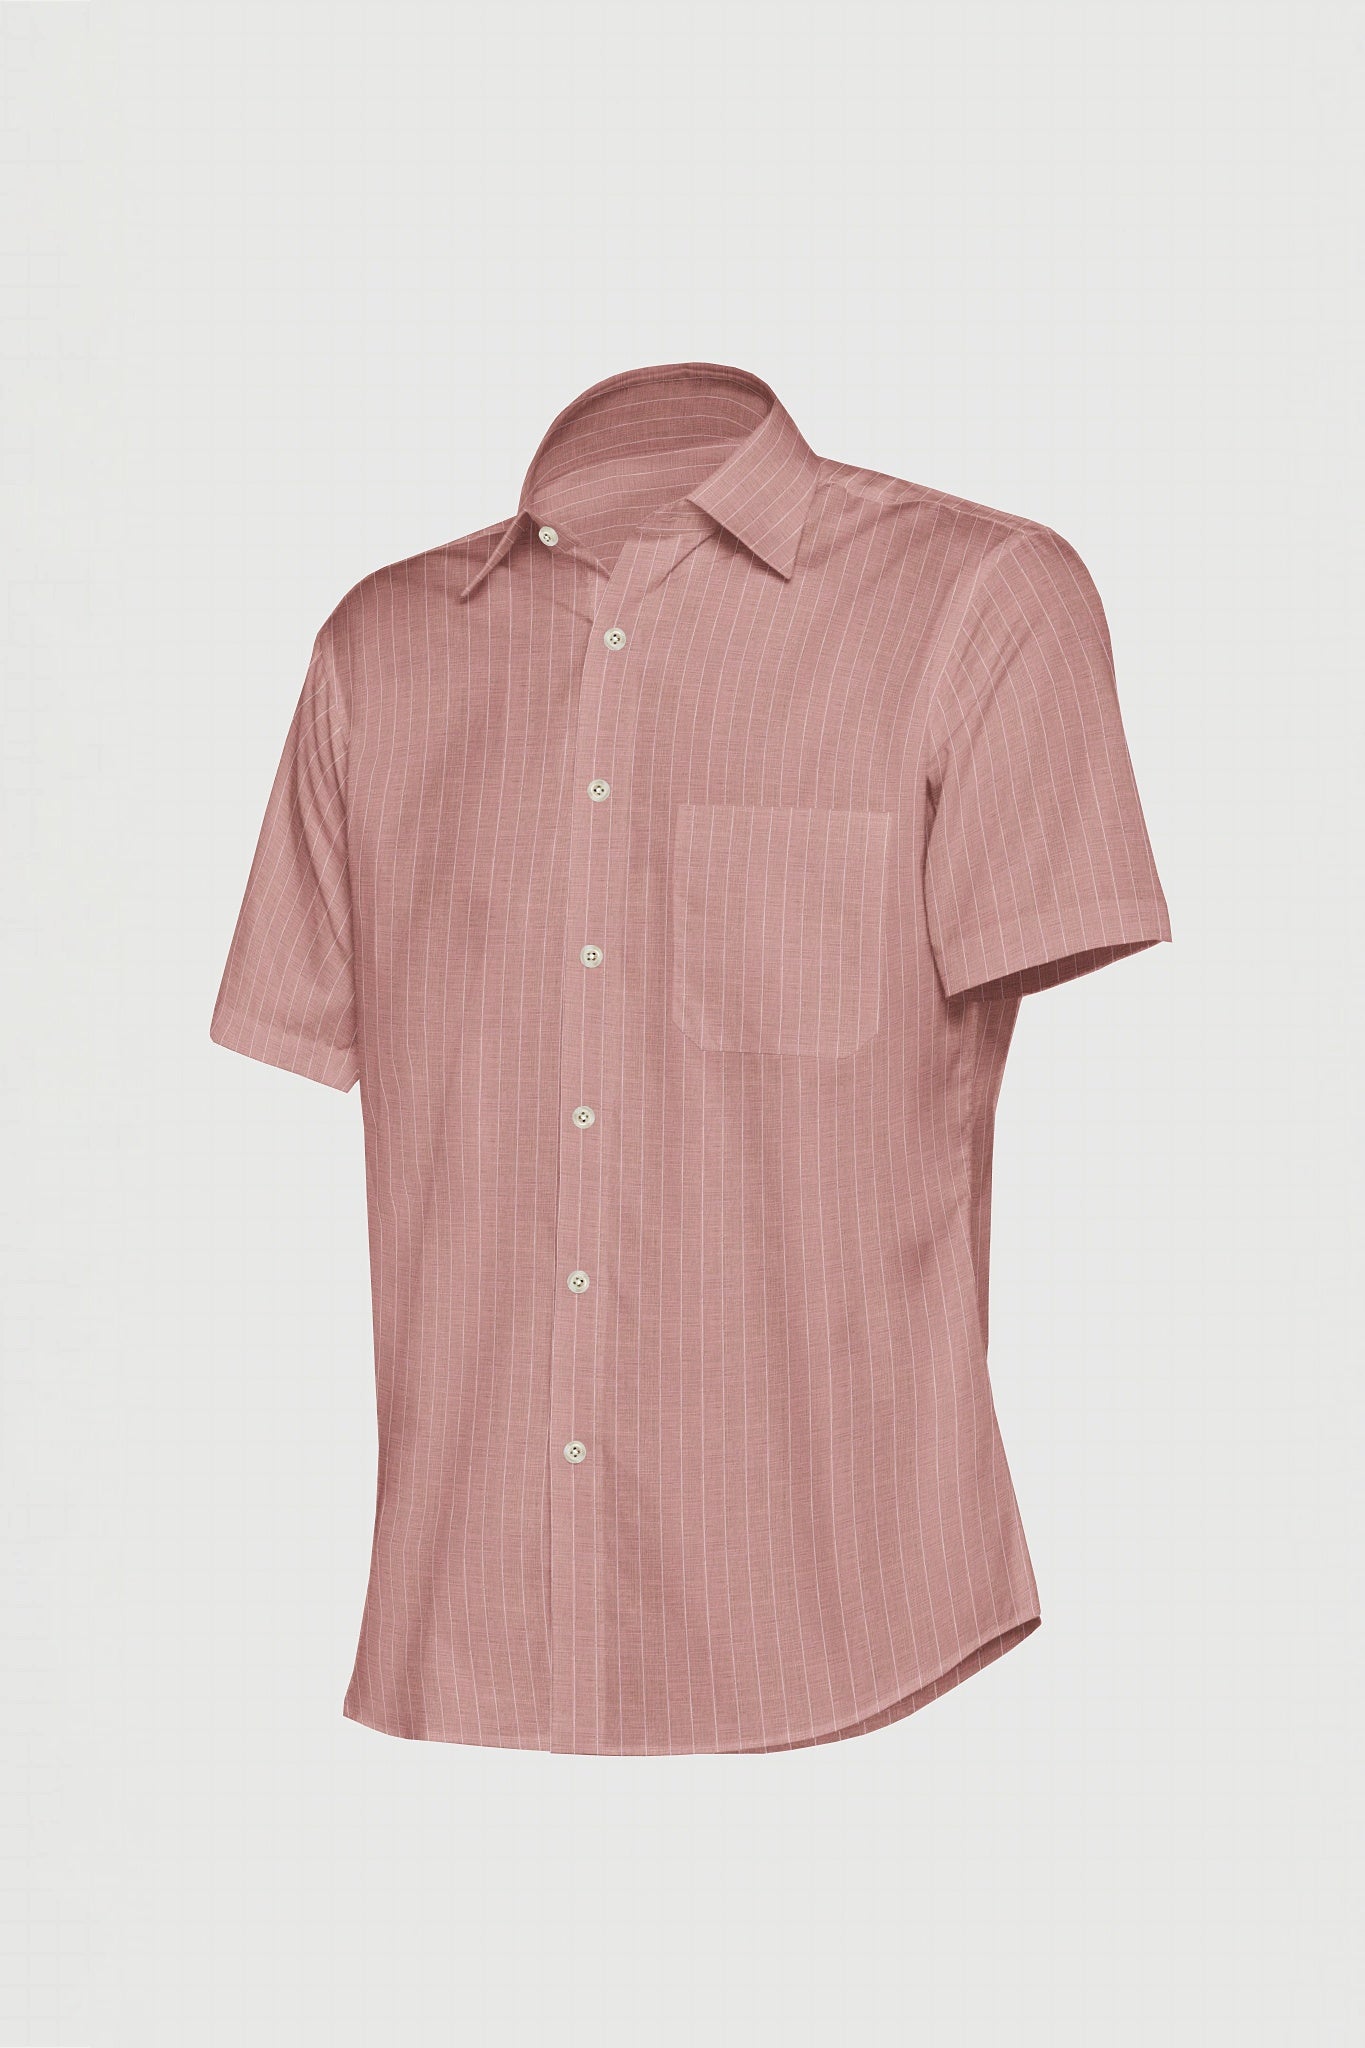 Blush Peach and White Pinstripes Linen Cotton Shirt